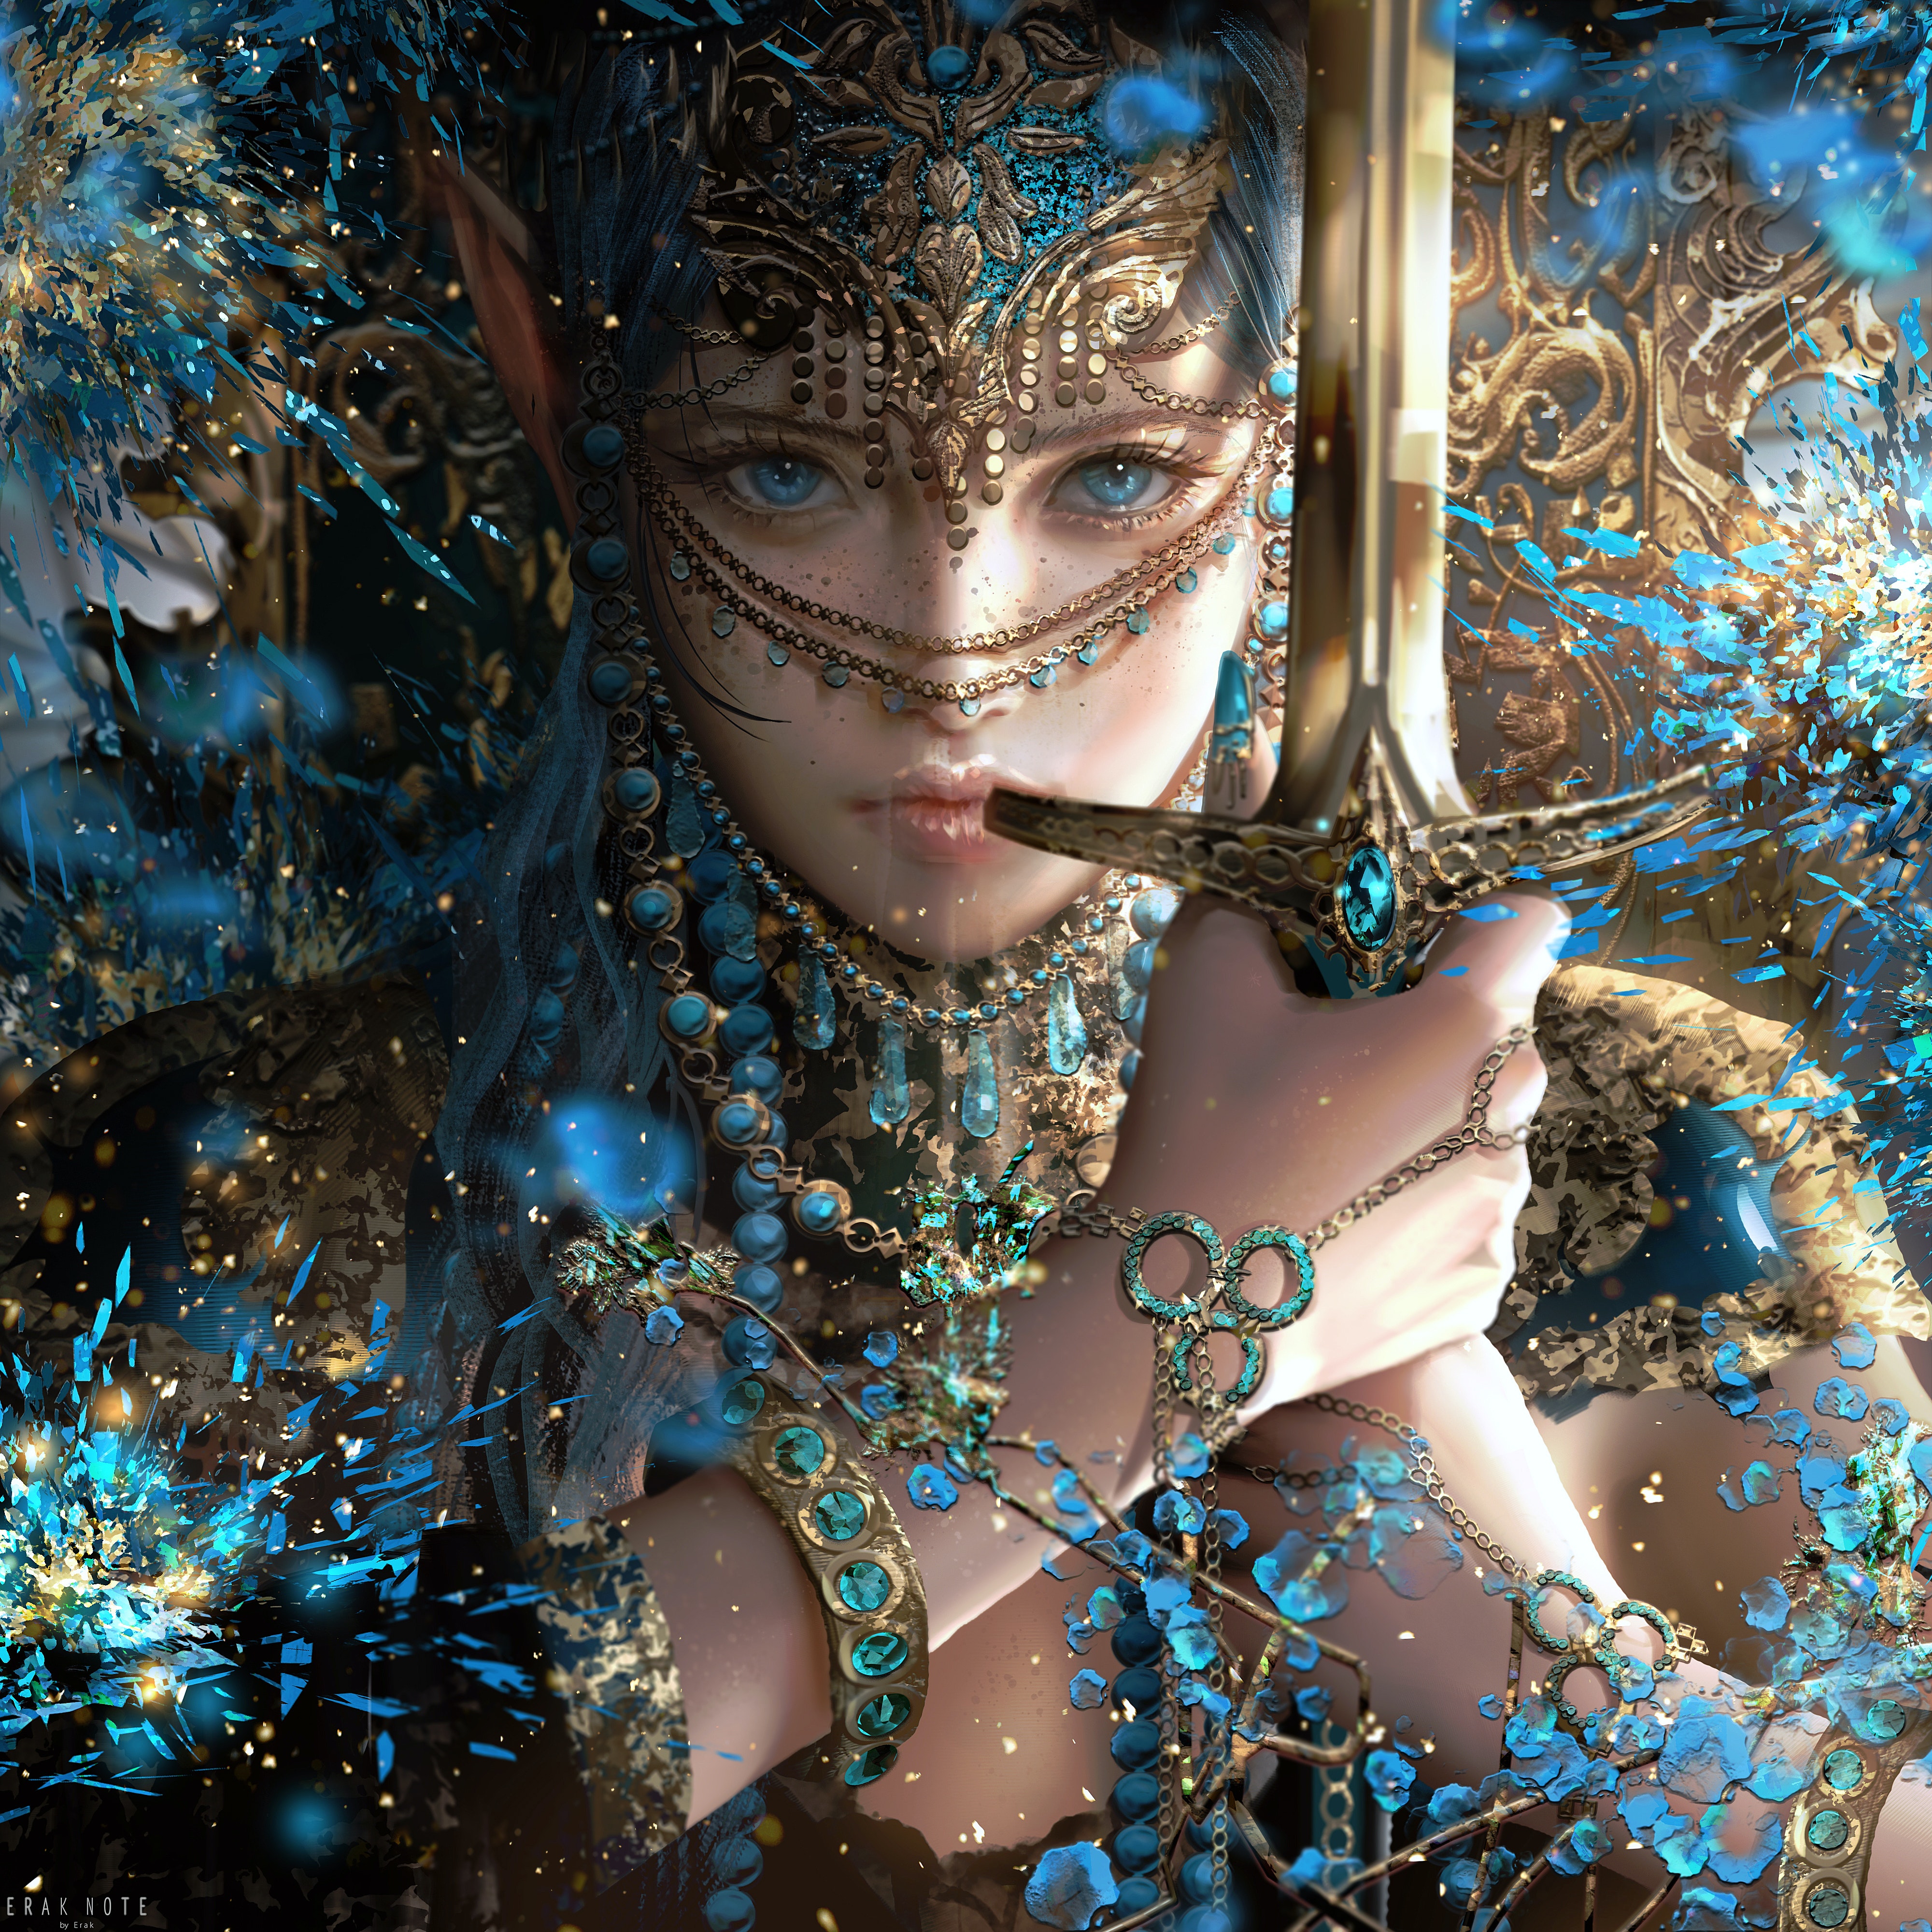 Digital Digital Art Artwork Illustration Erak Note Women Fantasy Girl Blue Eyes Fantasy Art Sword Lo 4000x4000